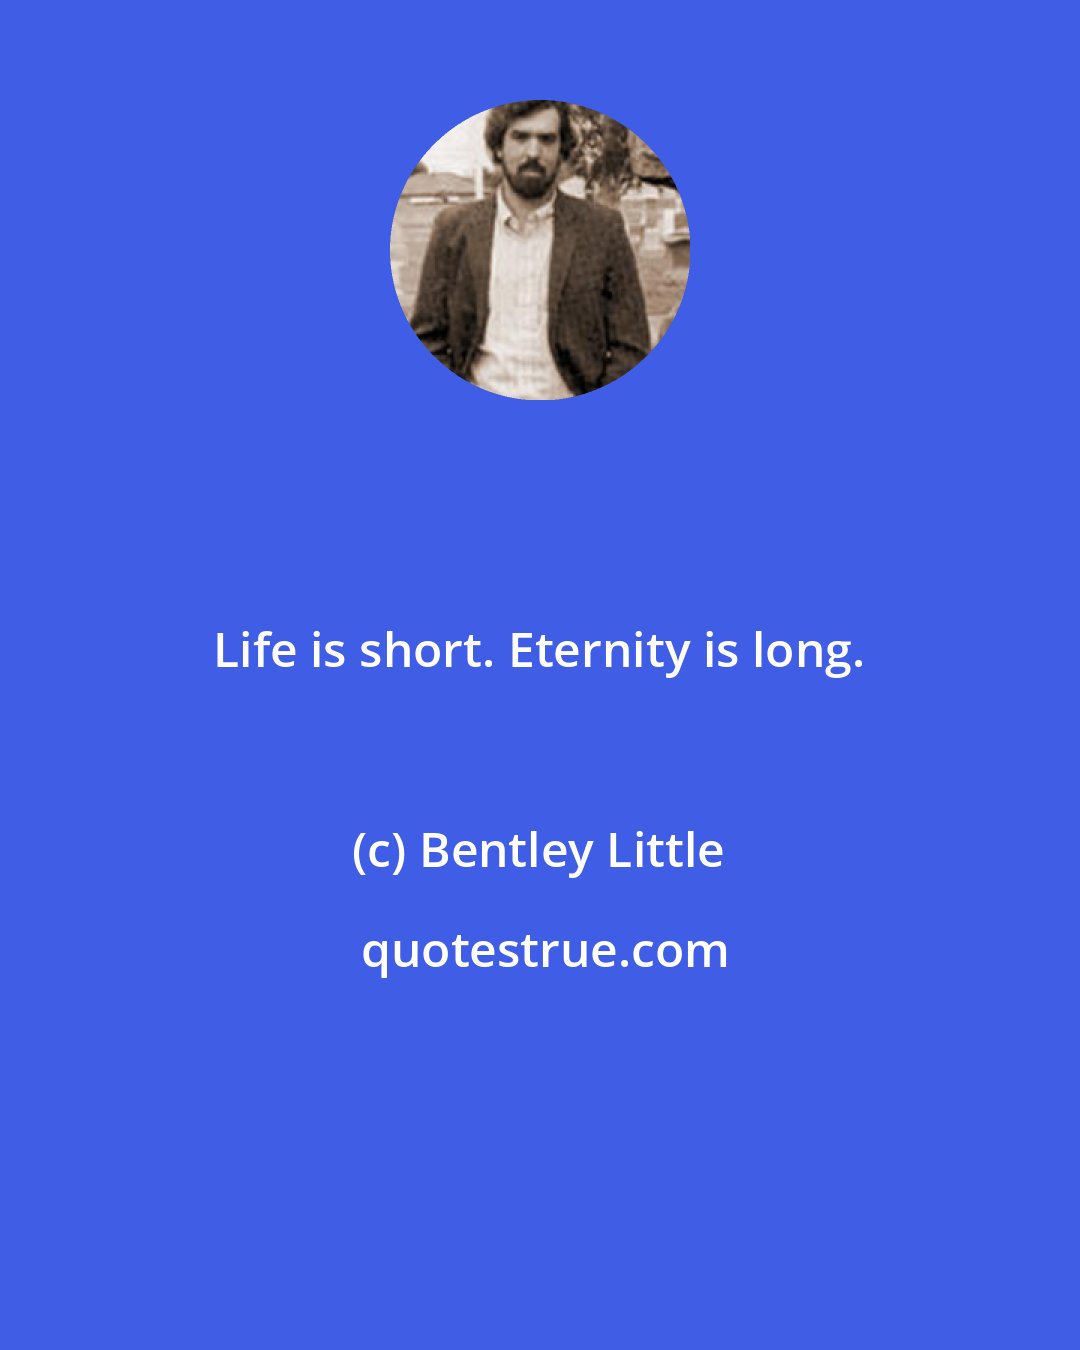 Bentley Little: Life is short. Eternity is long.